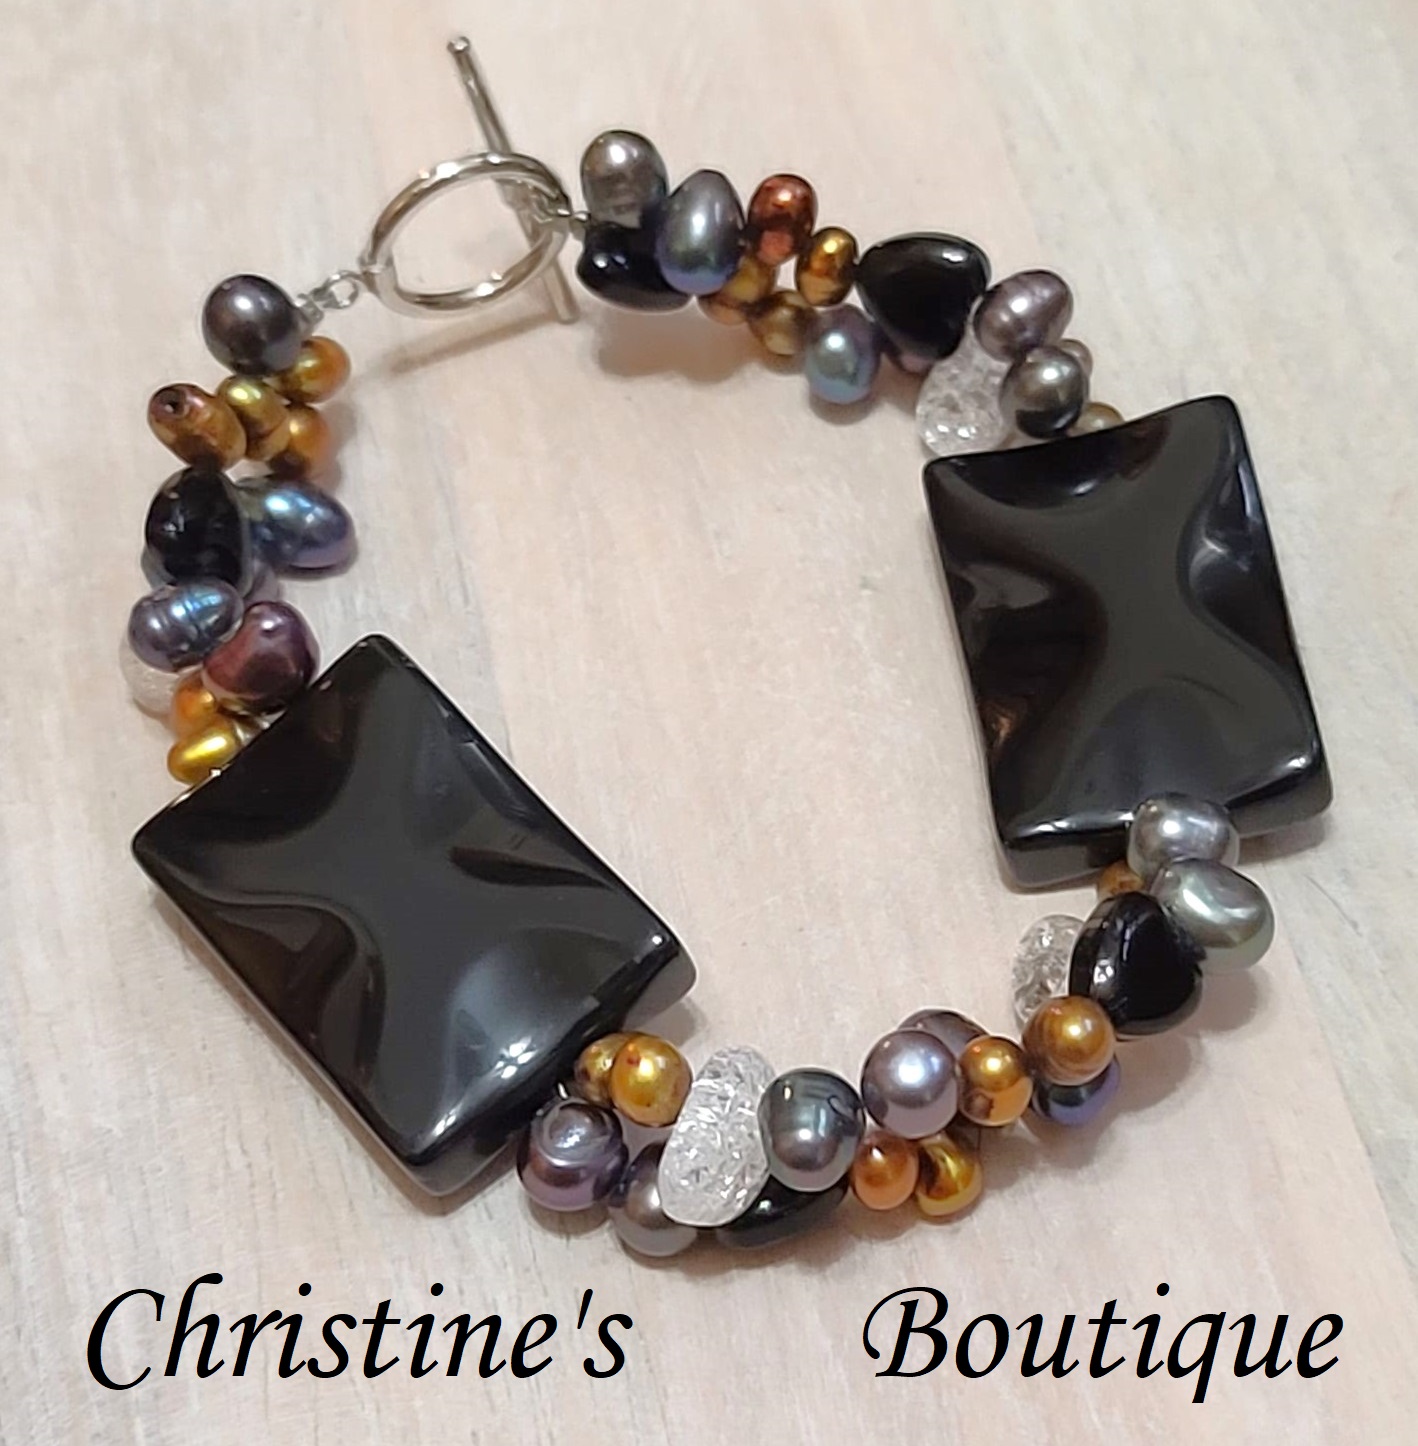 Gemstone chunky bracelet, Onyx and freshwater pearls two strand